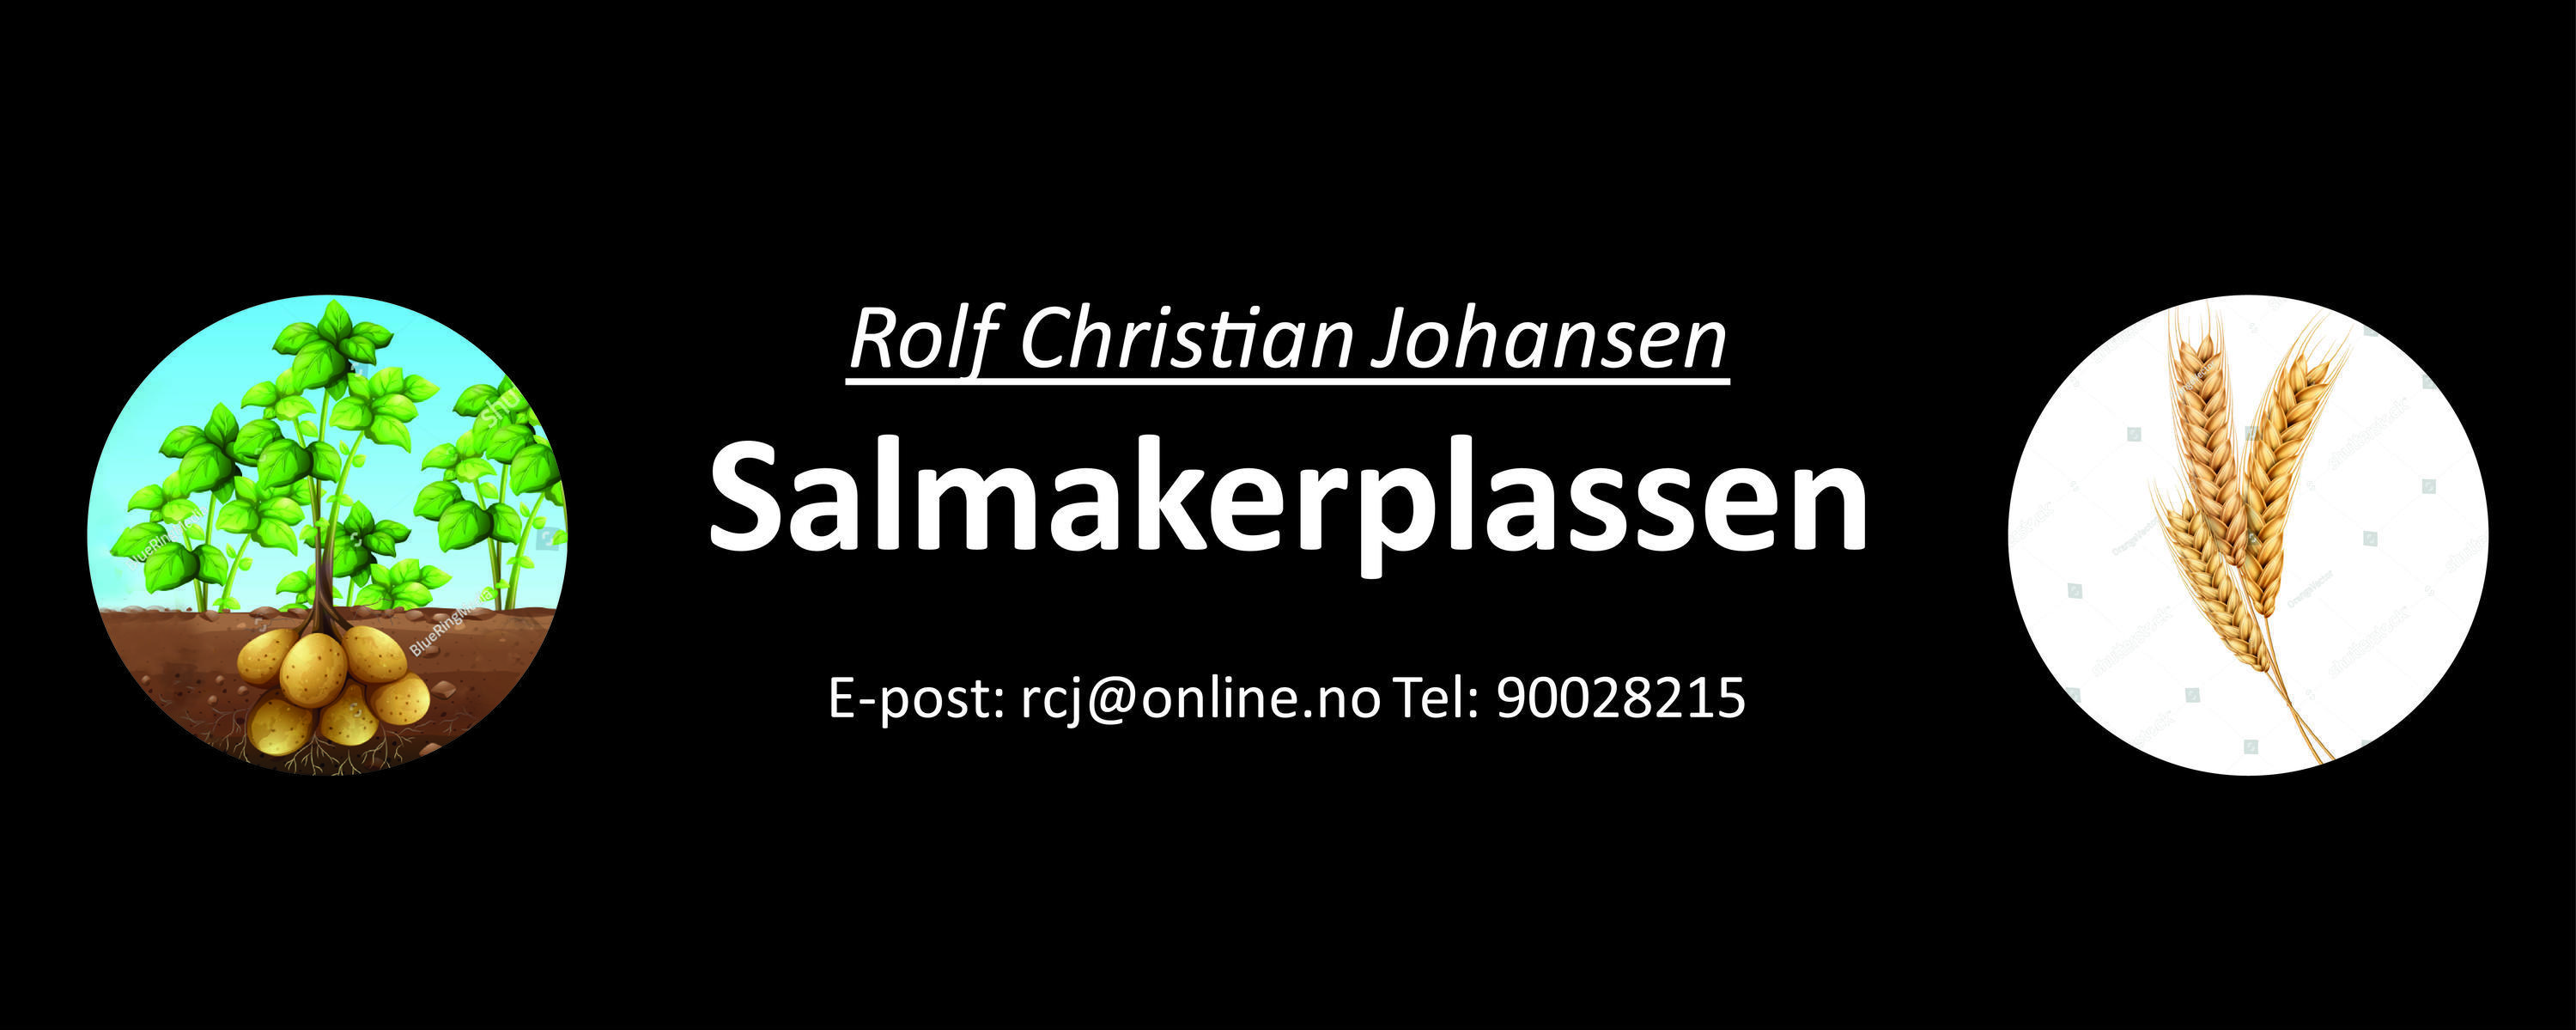 Rolf Christian Johansen - Salmakerplassen